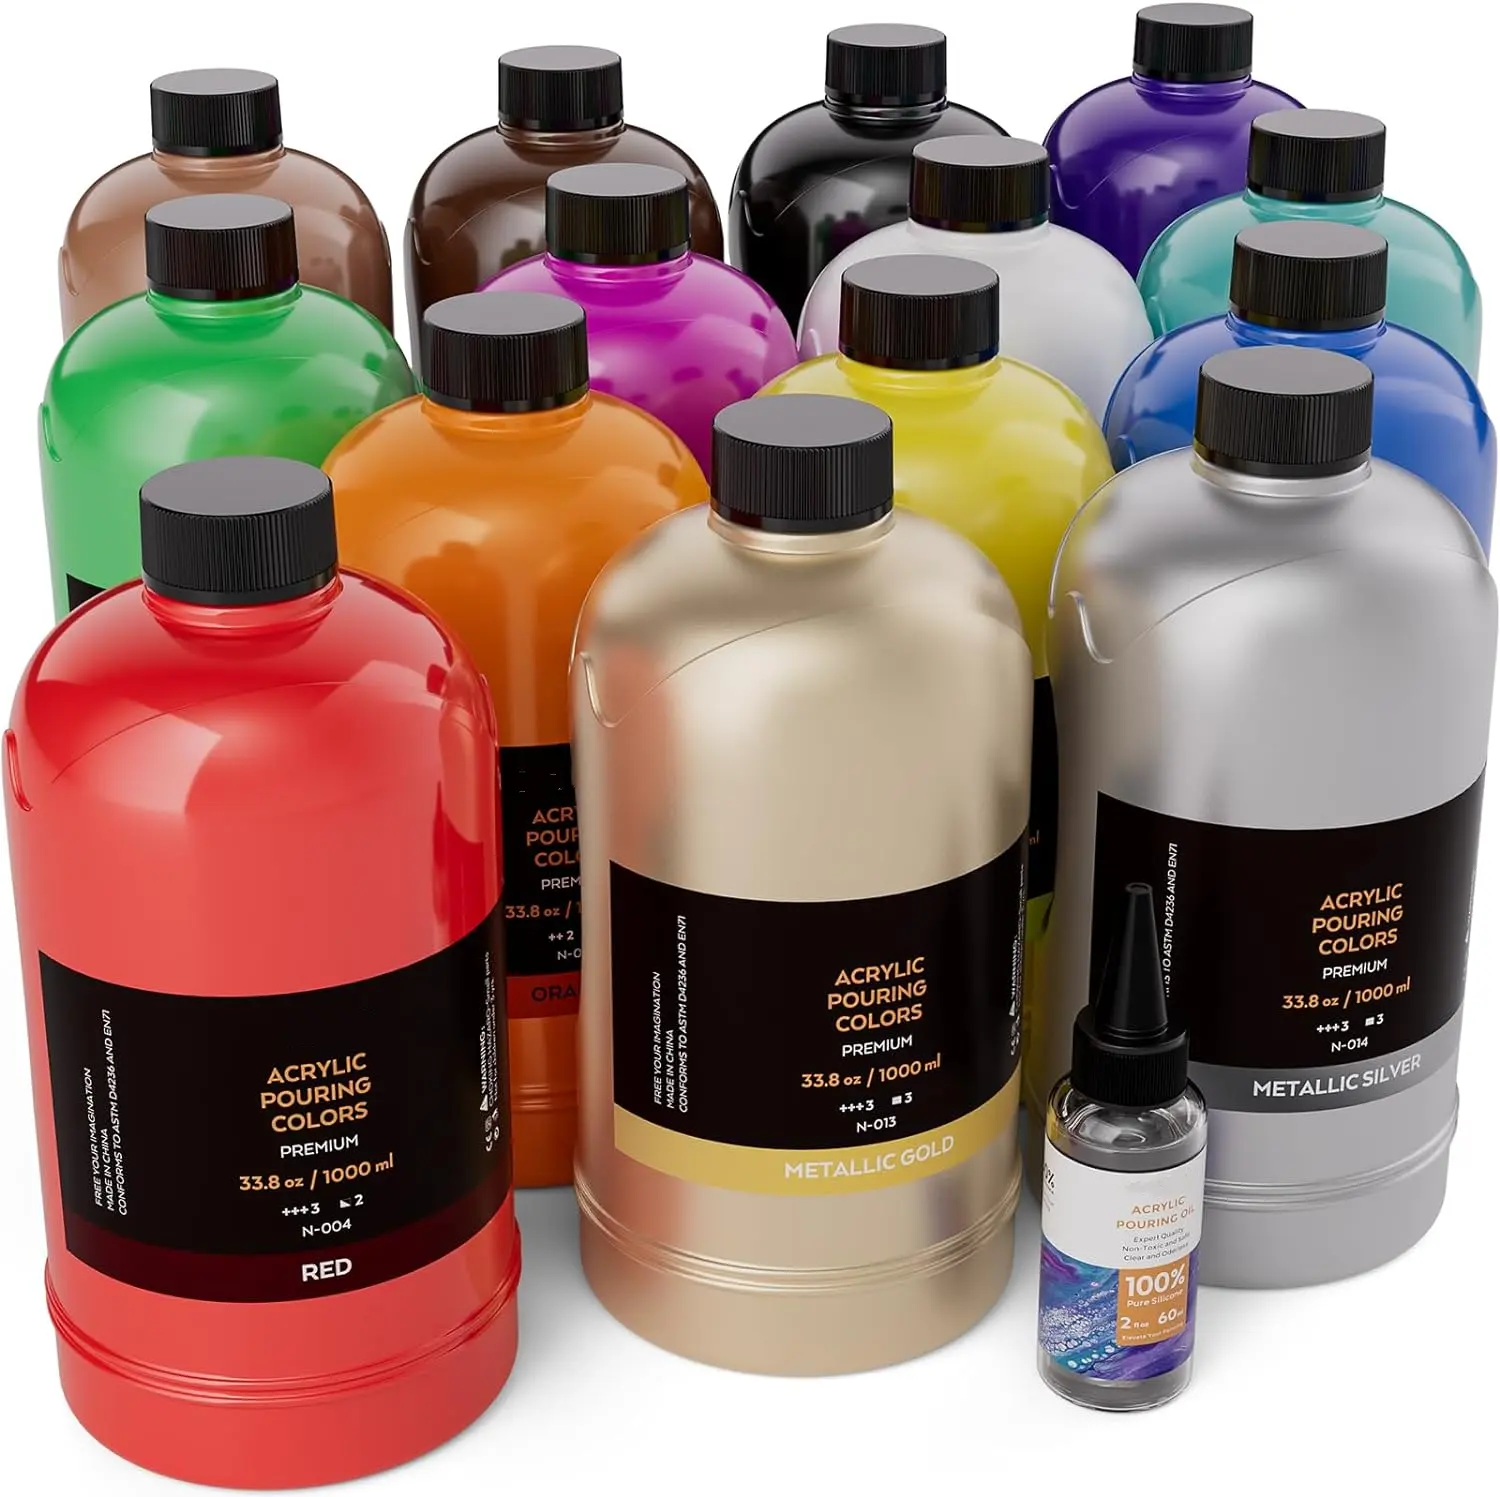 14 Colors Large Bulk Acrylic Pour Paint Set (33.8 oz /1000 ml) Premixed High Flow Art Pouring Supplies Kit with Silicone Oil DIY